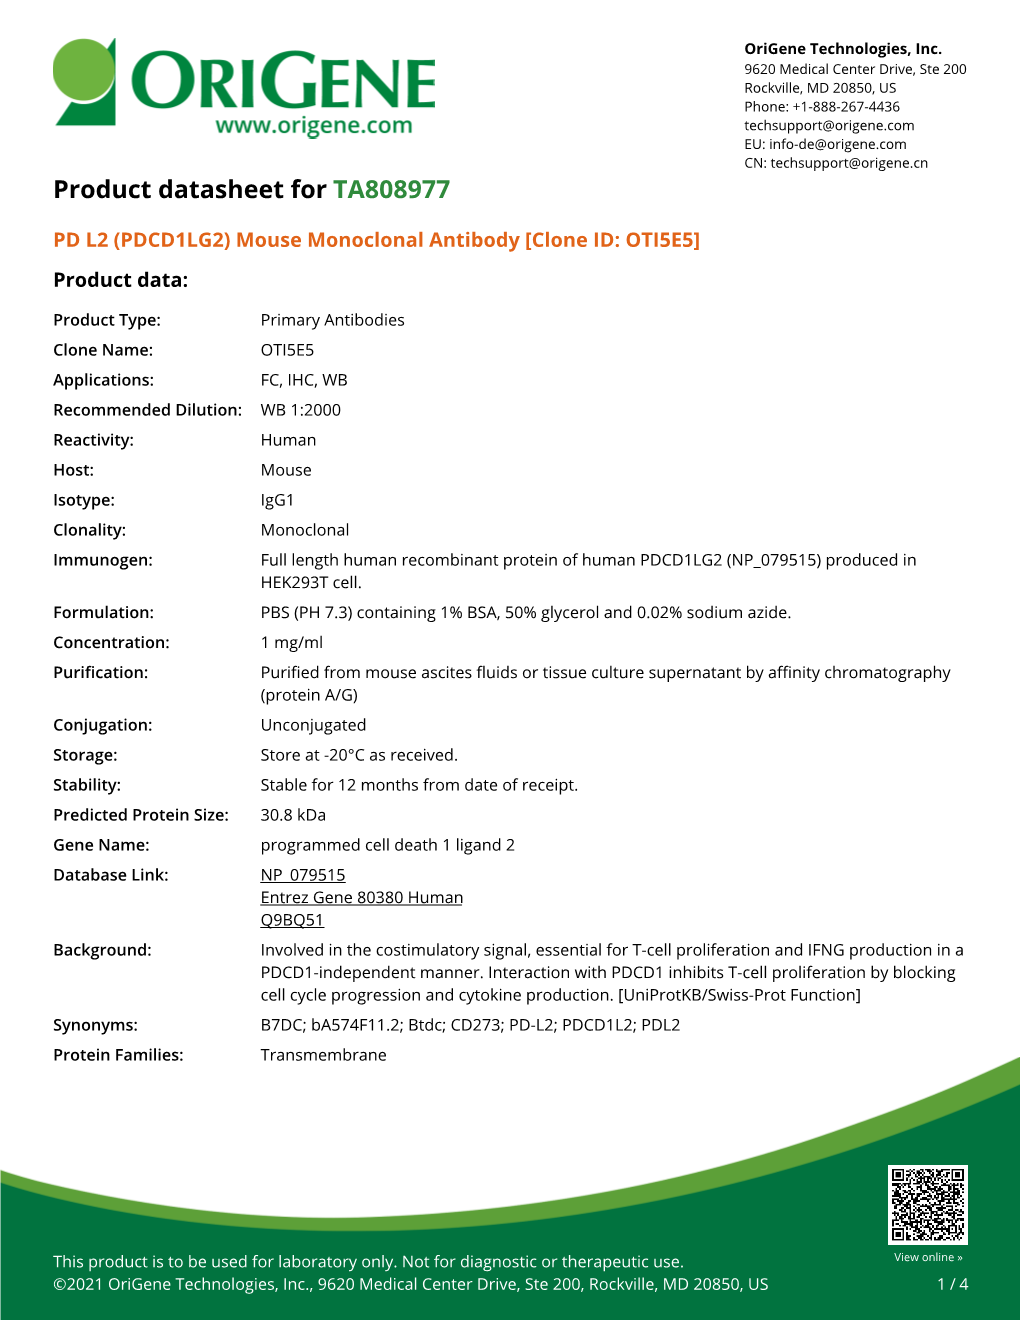 (PDCD1LG2) Mouse Monoclonal Antibody [Clone ID: OTI5E5] Product Data